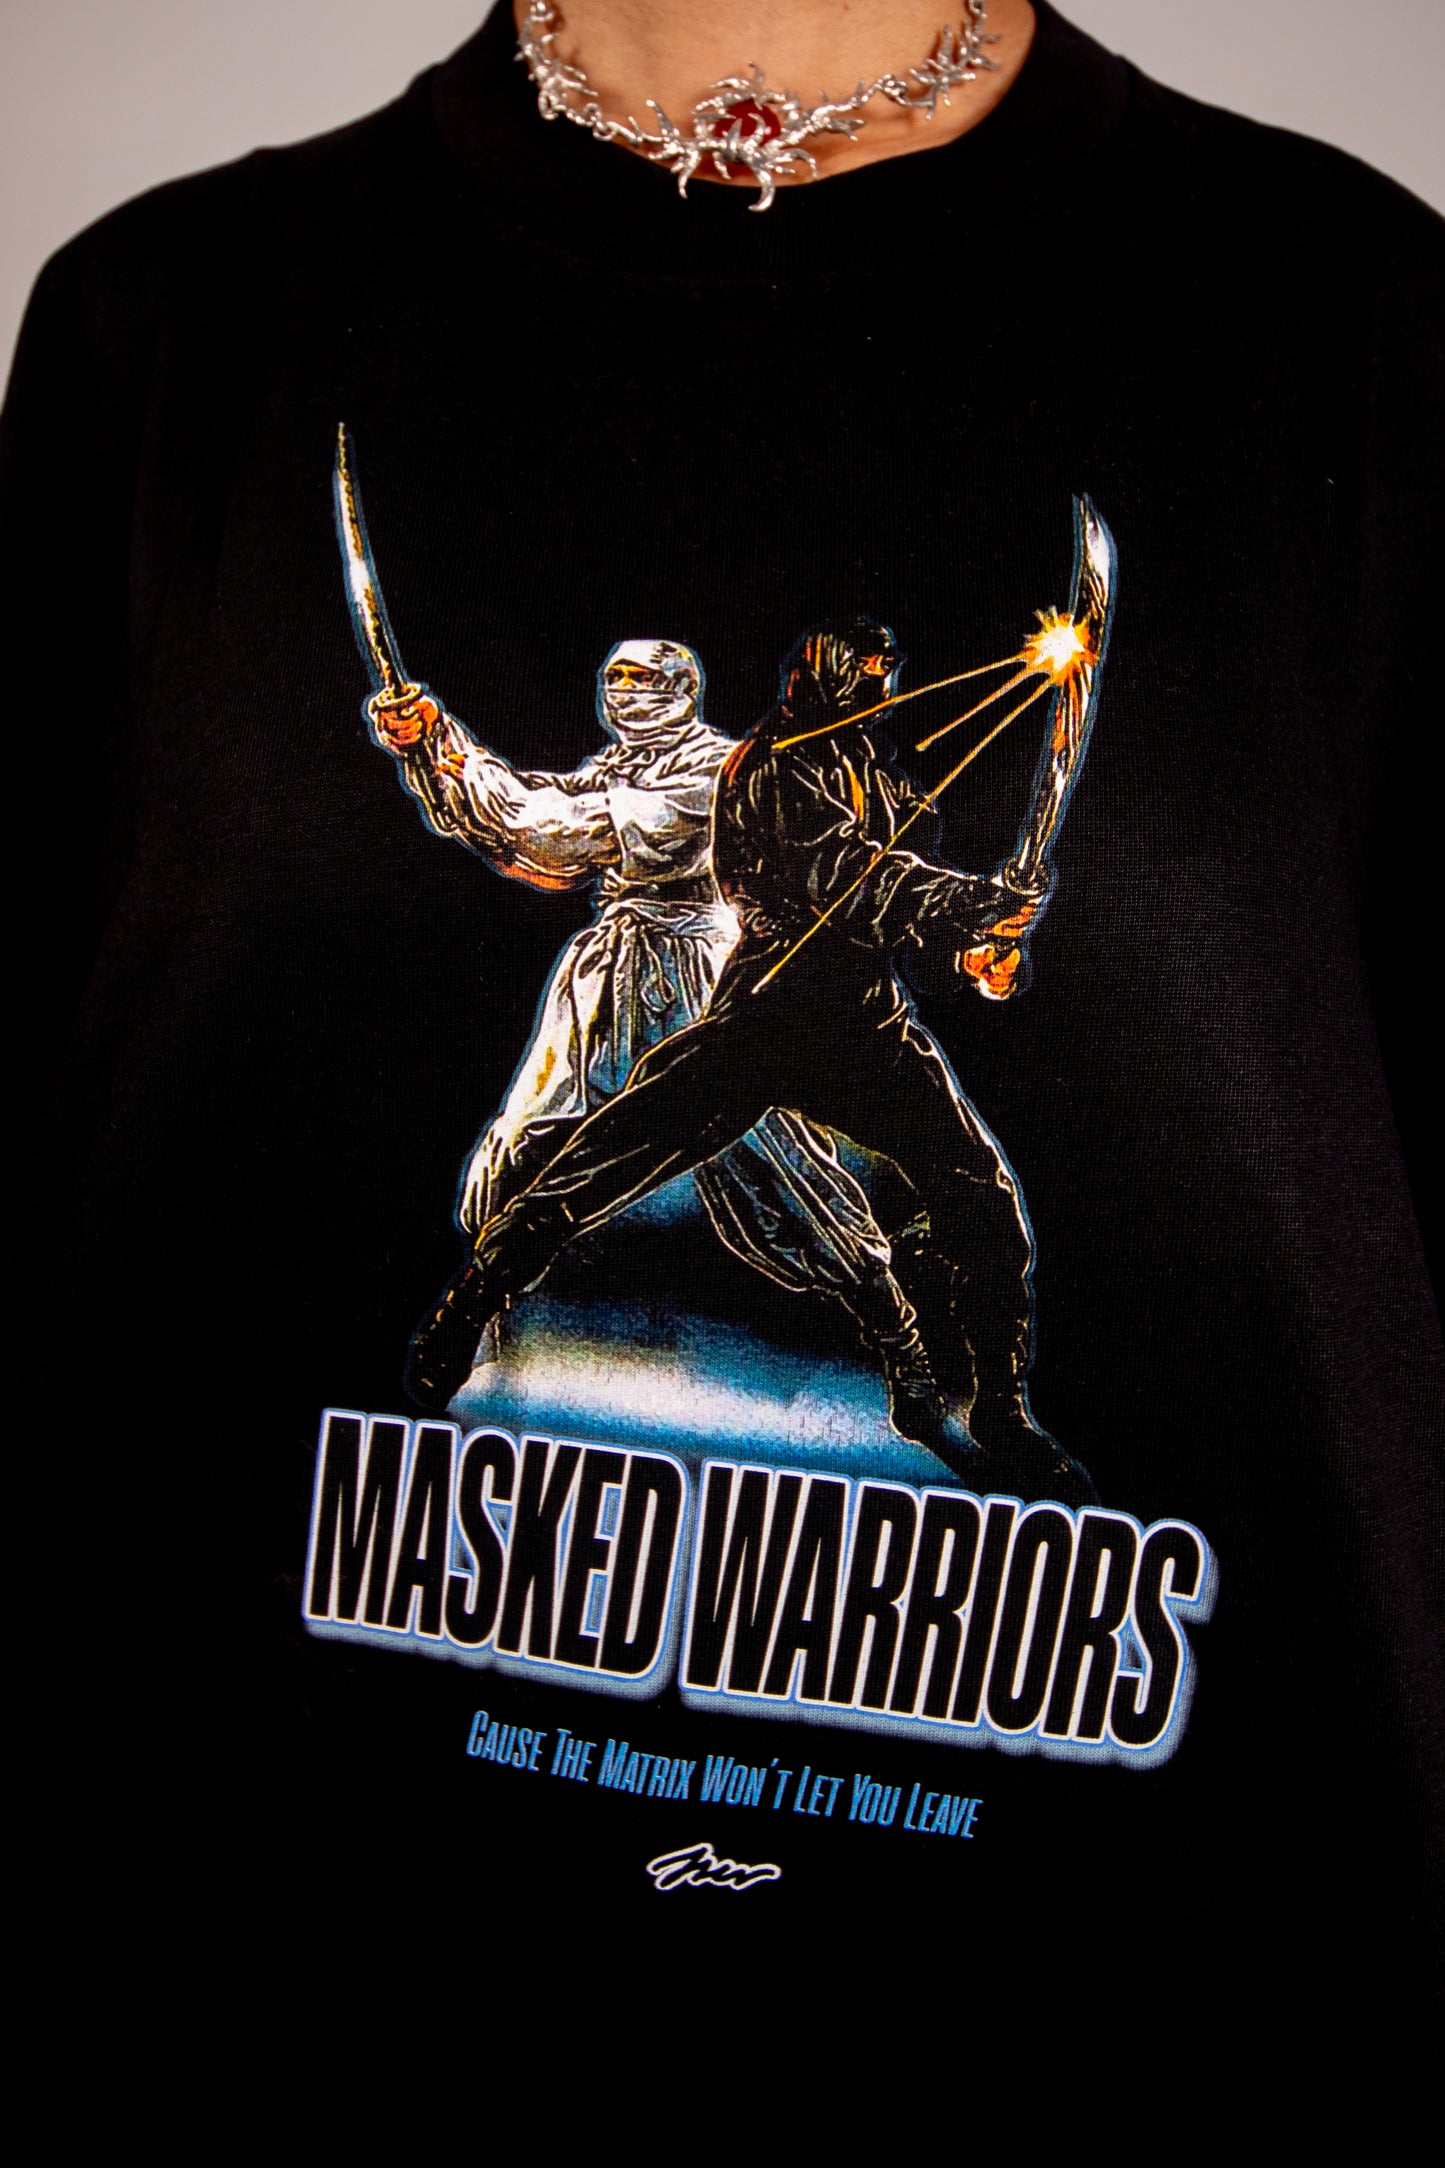 Masked Warriors Black Tee